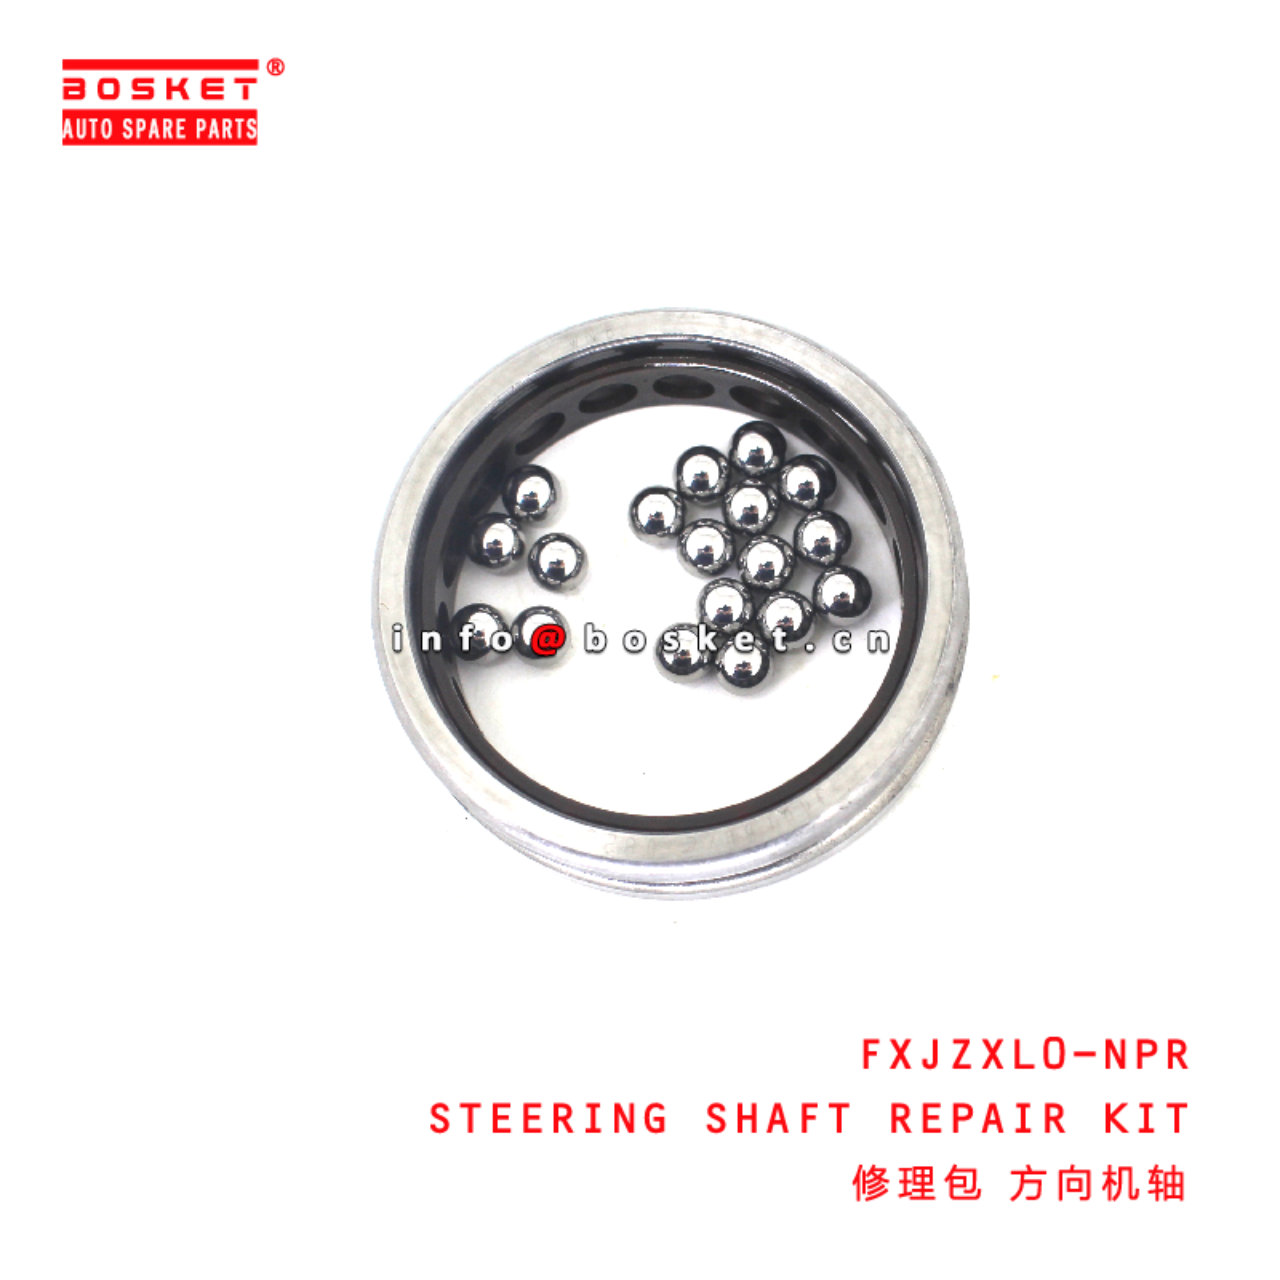 FXJZXL0-NPR Steering Shaft Repair Kit suitable for...